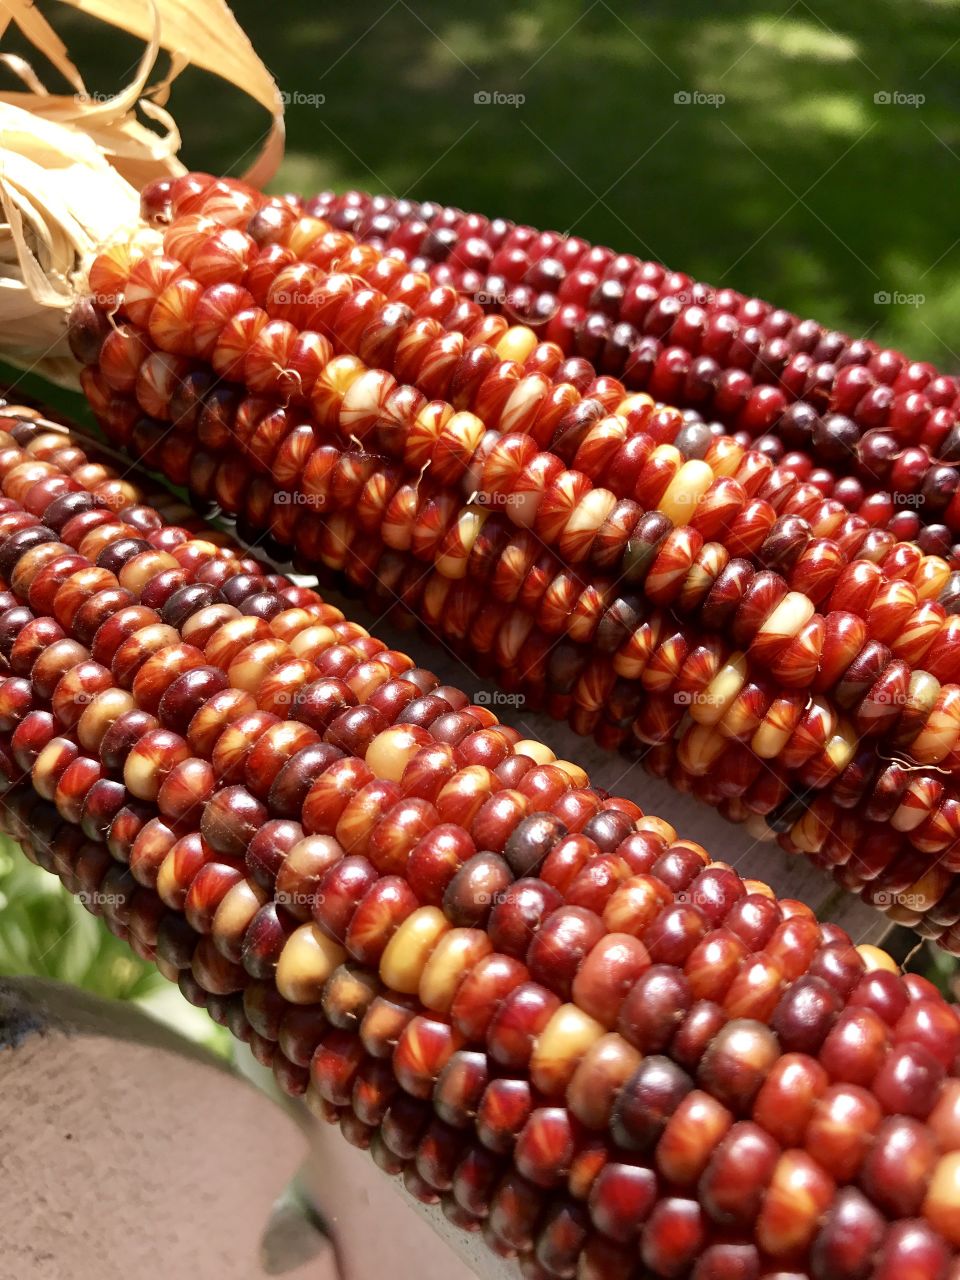 Colorful verities of corn